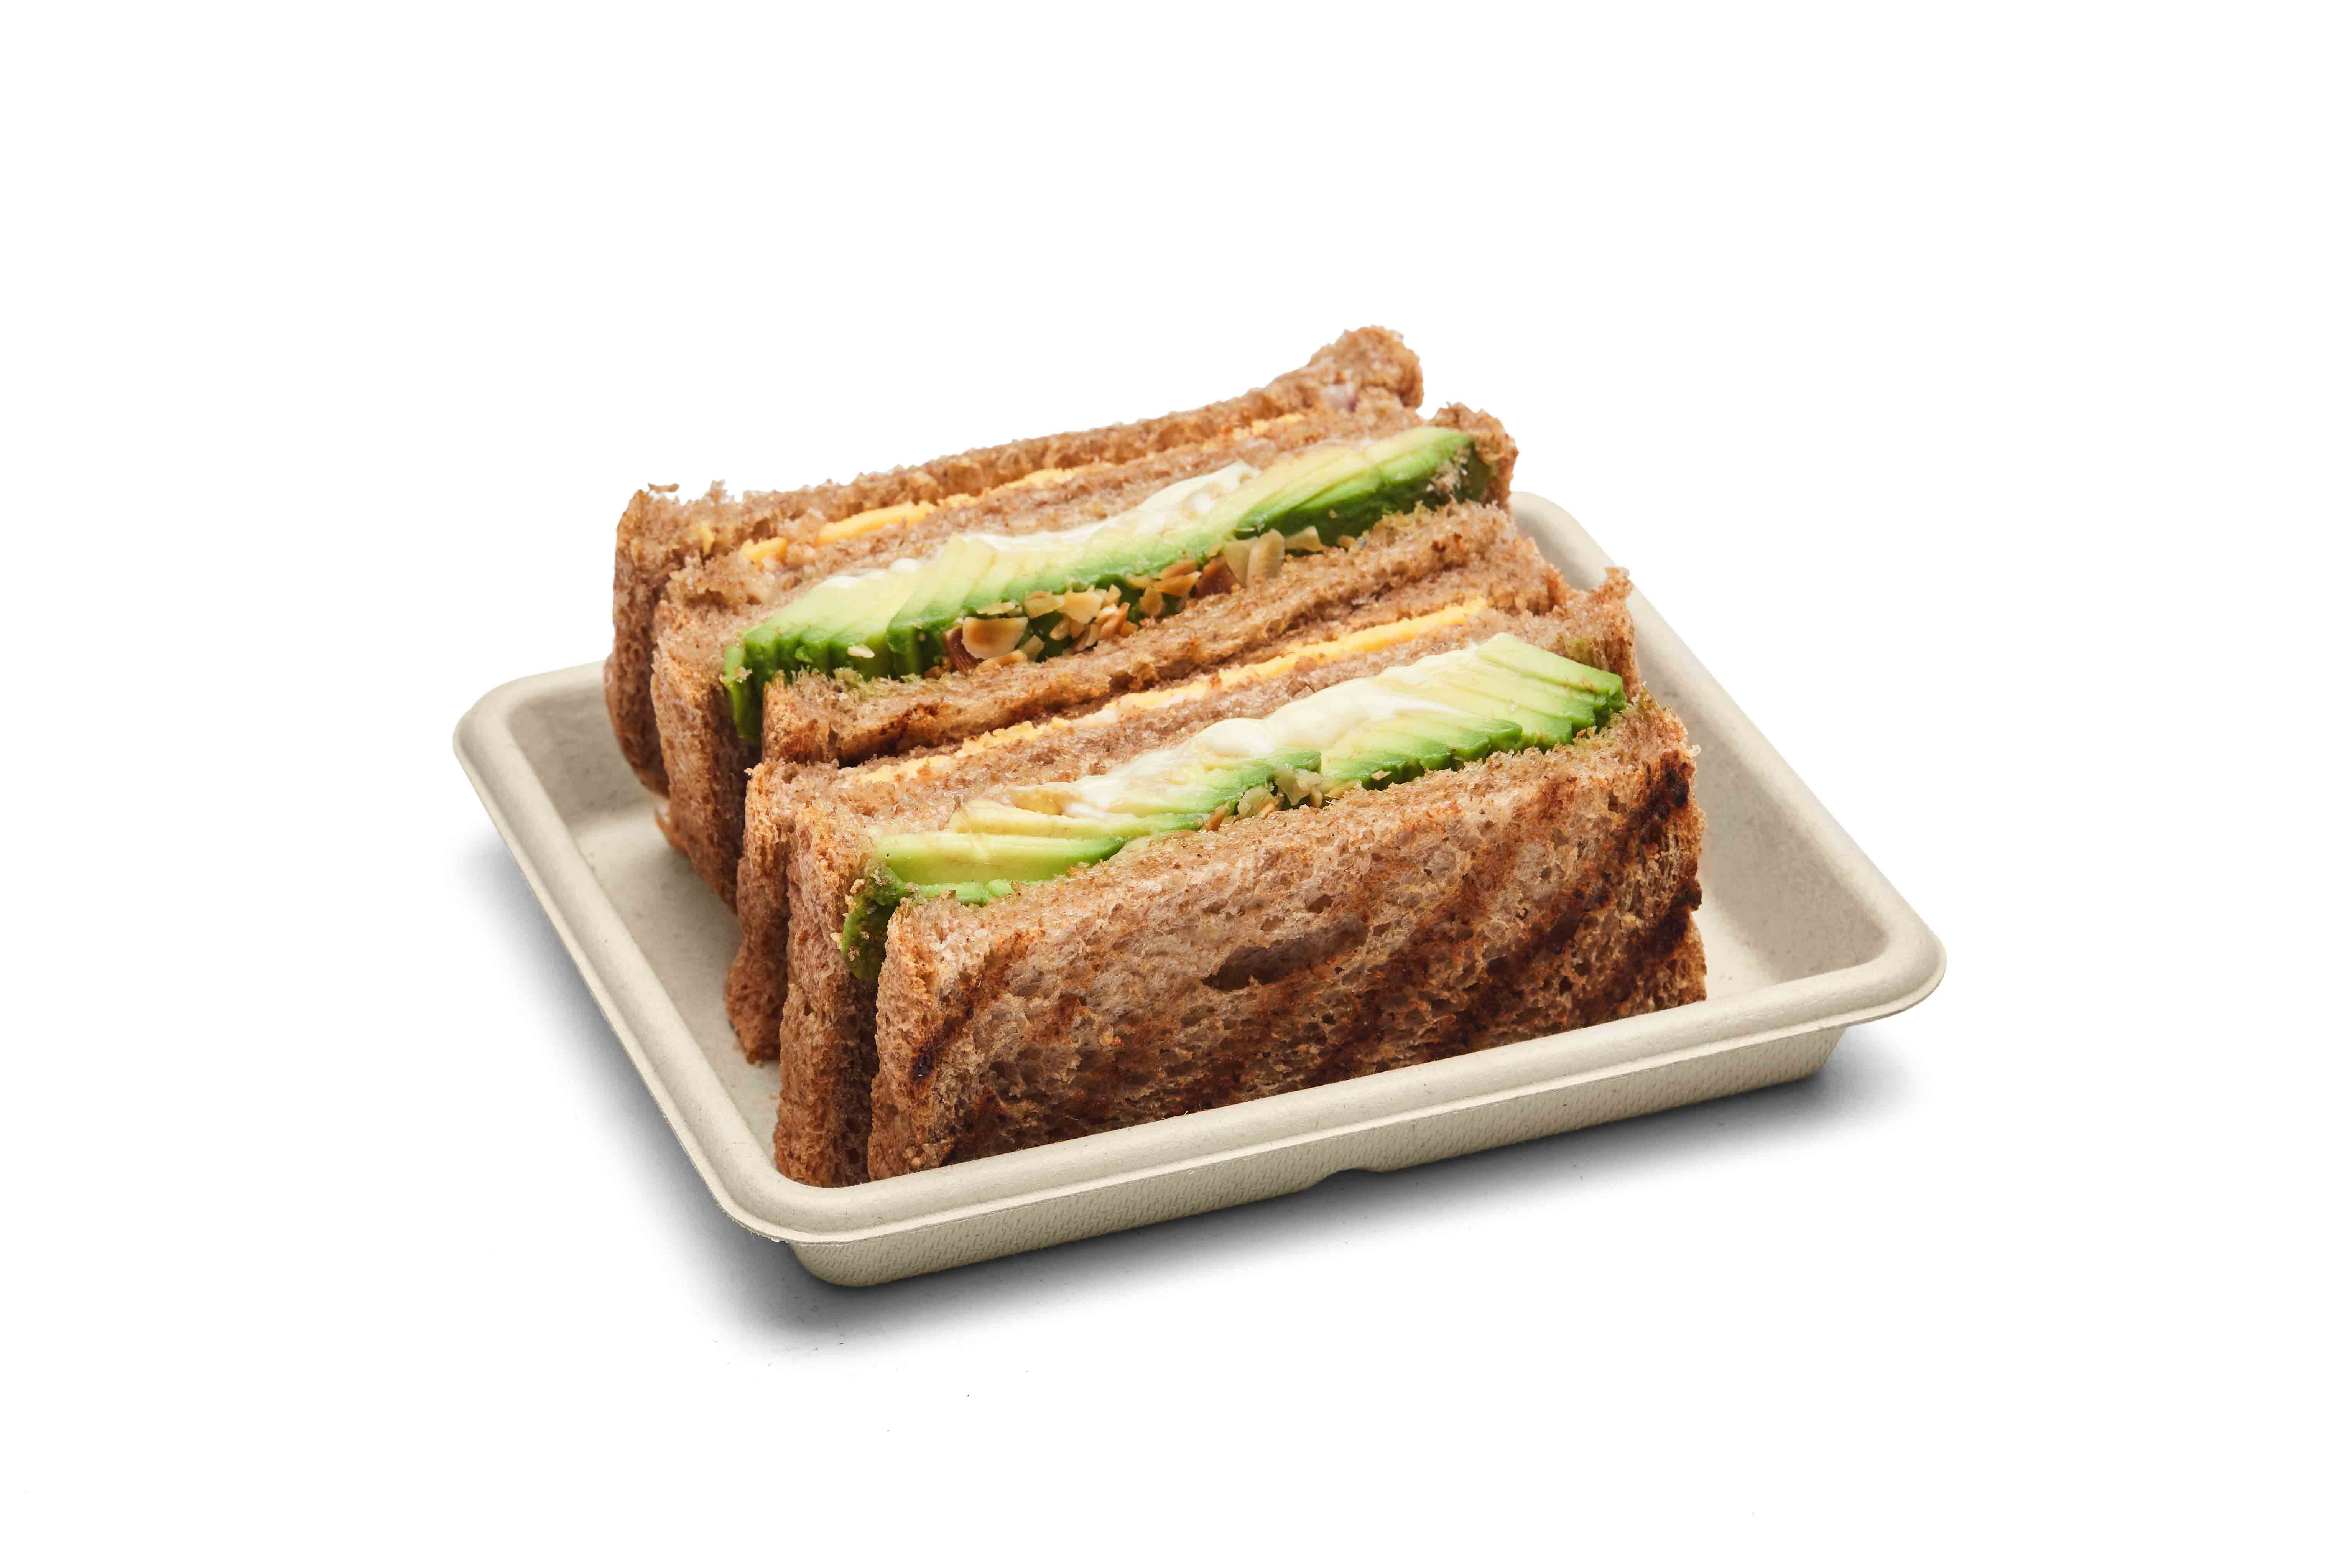 New SBK sandwich tray